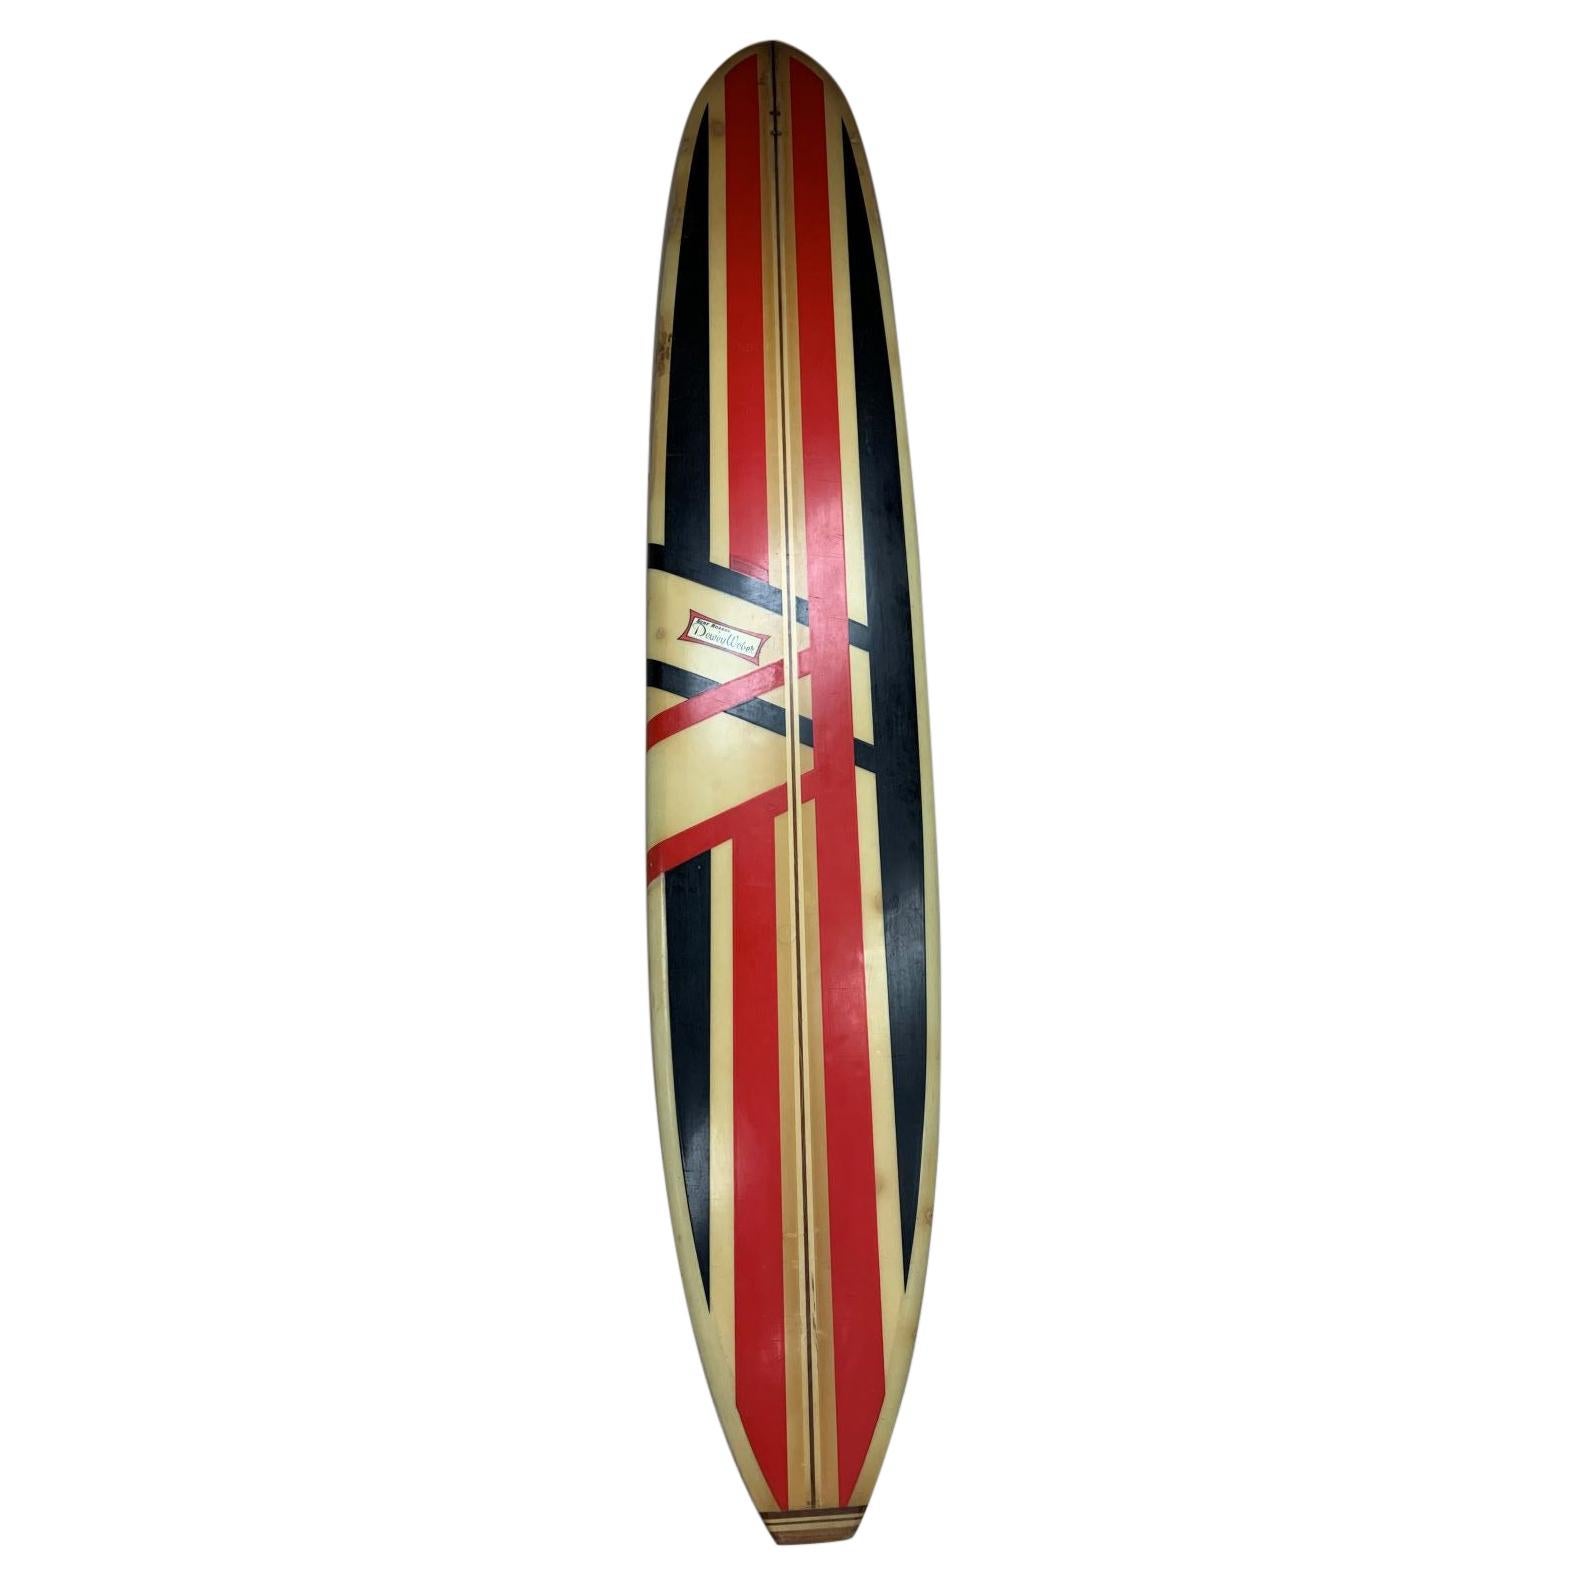 Details about   Dewey Weber Surfboard Sticker vintage style Authentic 